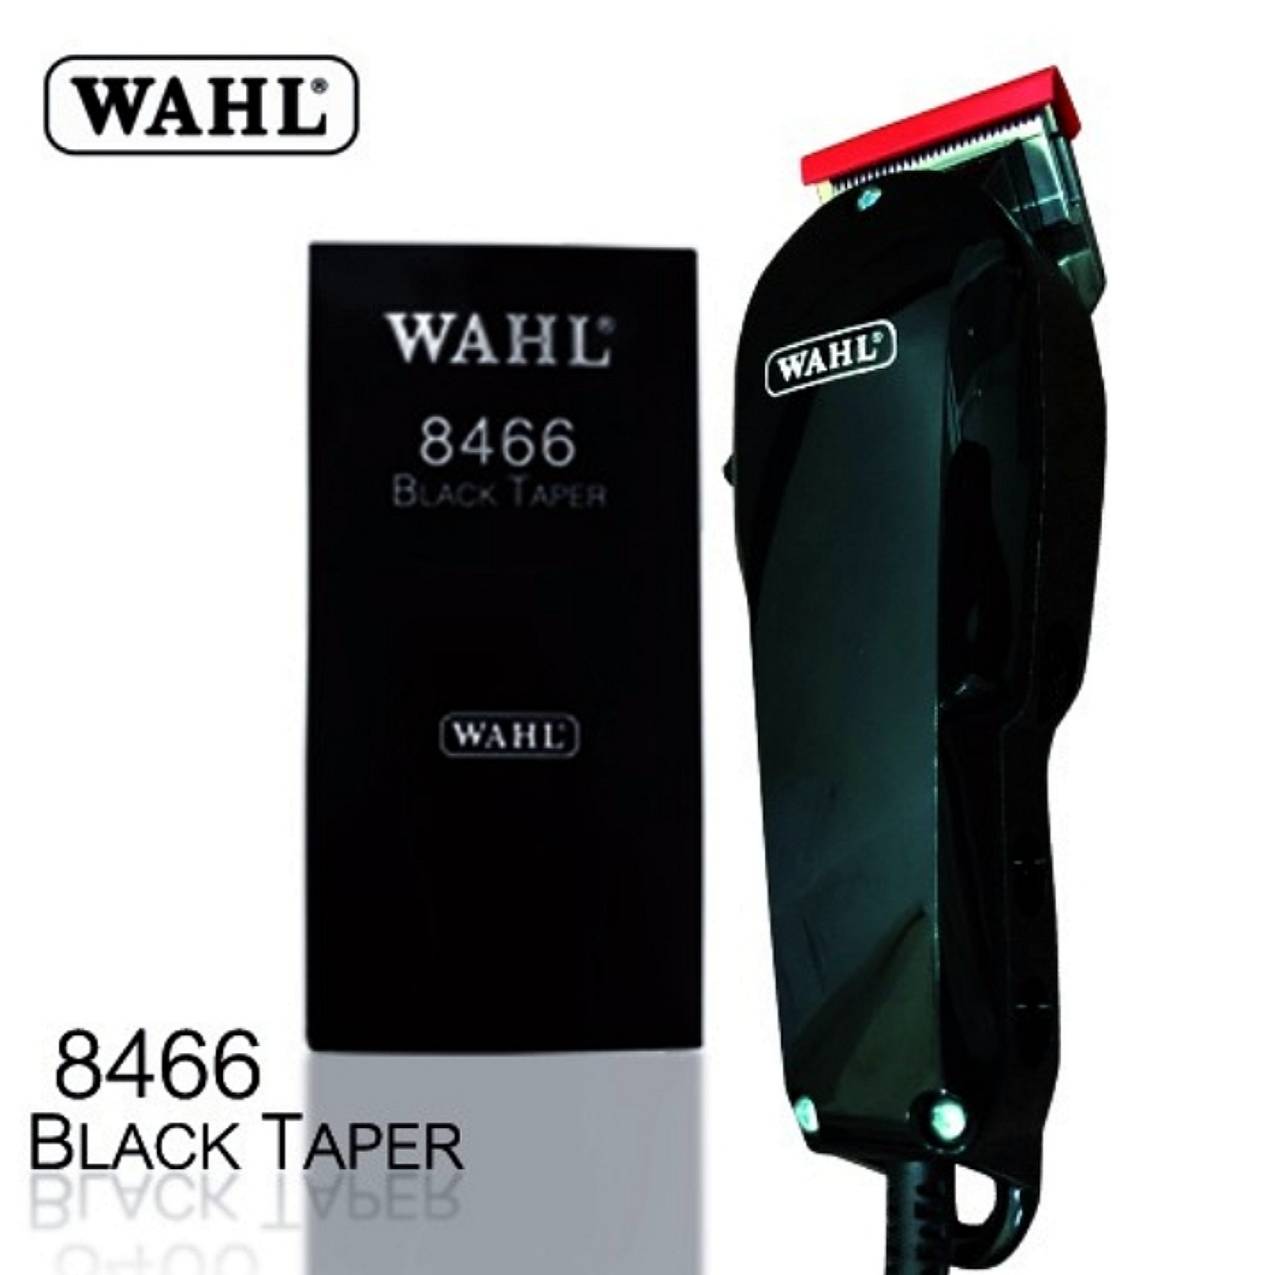 wahl black taper 8466